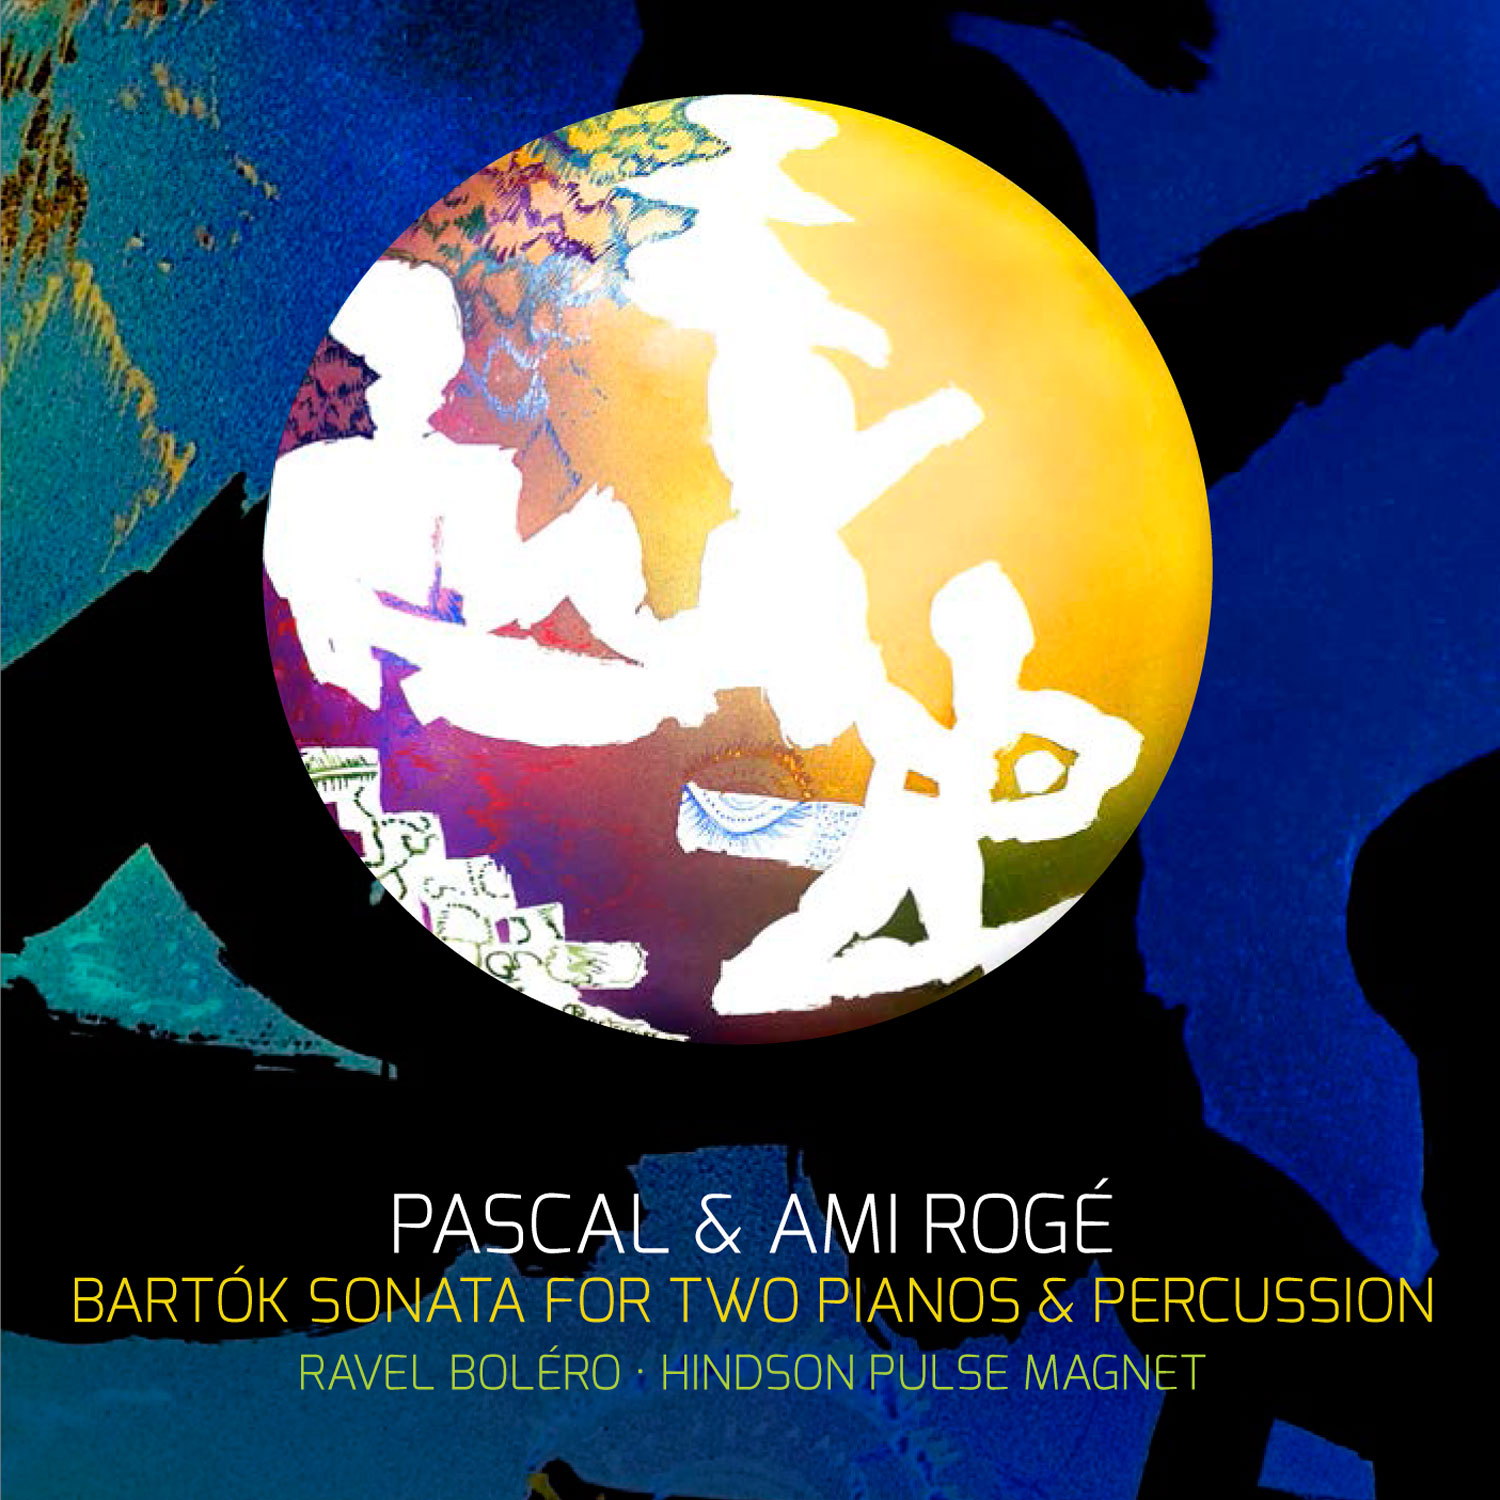 4155Pascal & Ami Rogé